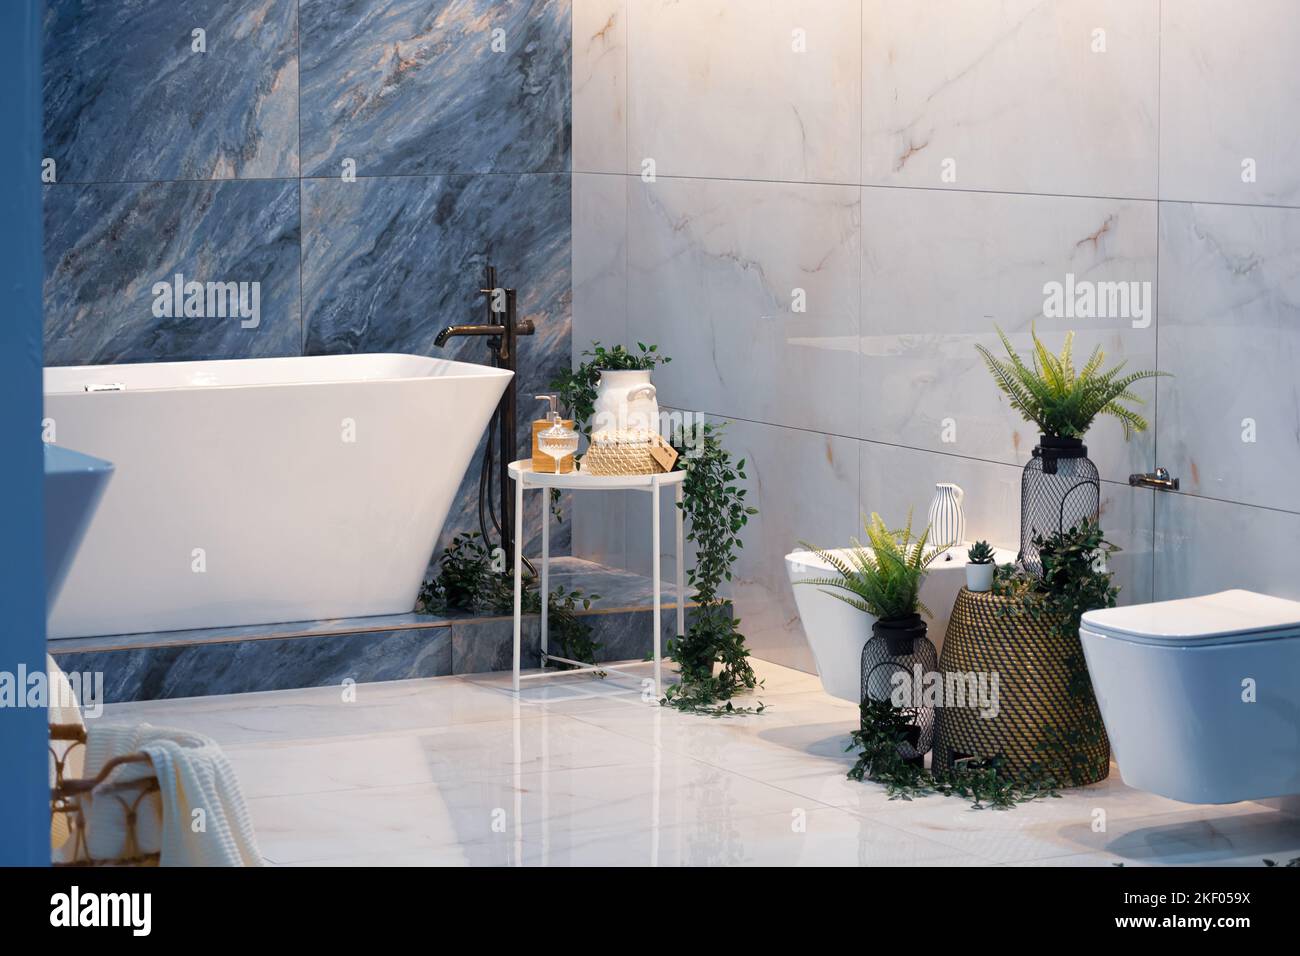 Rincón de un cuarto de baño con un bonito diseño. Foto de stock